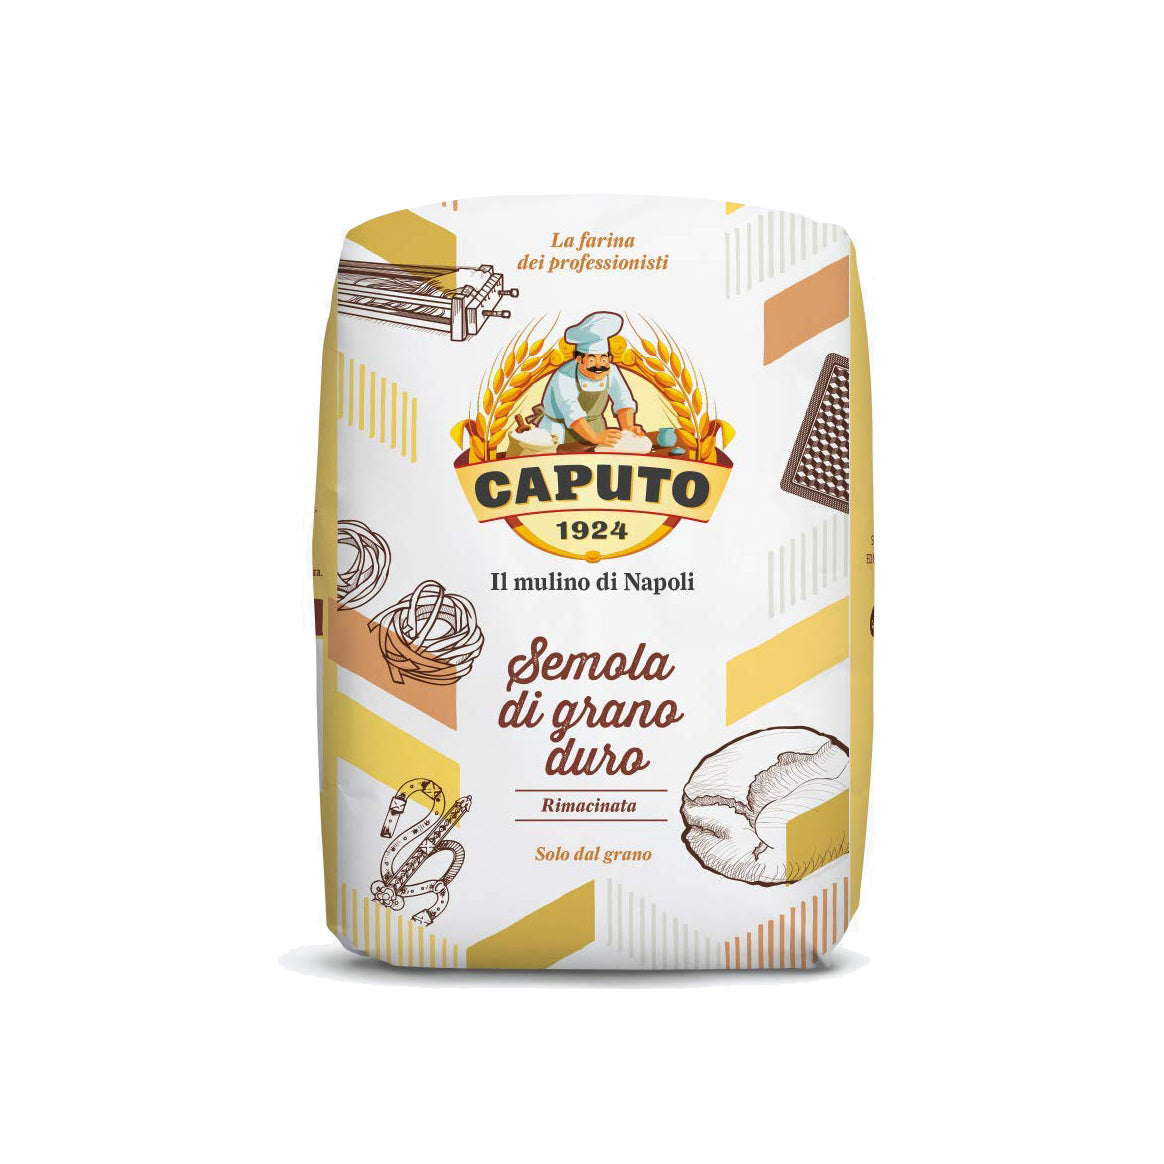 CAPUTO Semola Rimacinata, Double Milled Durum Wheat Semolina Flour, 1kg